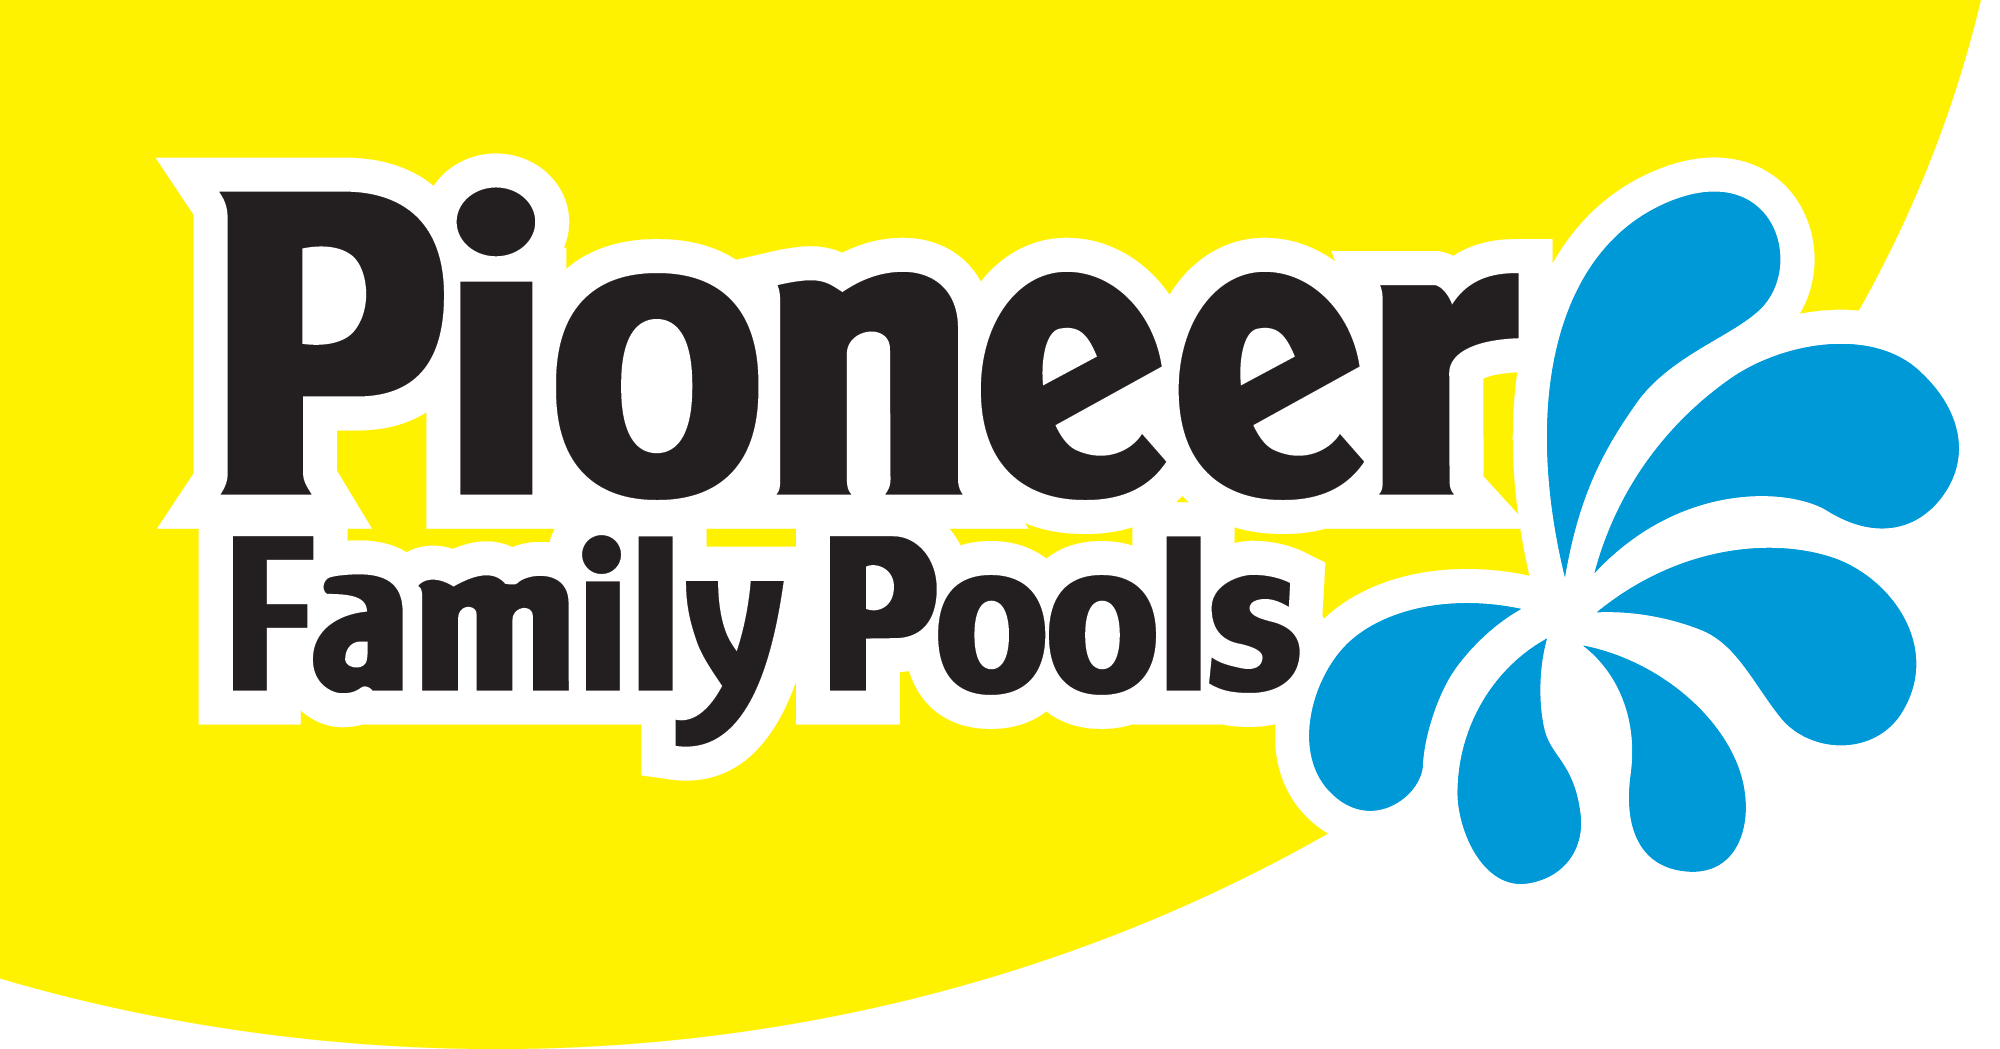 Family Pioneer Pools 